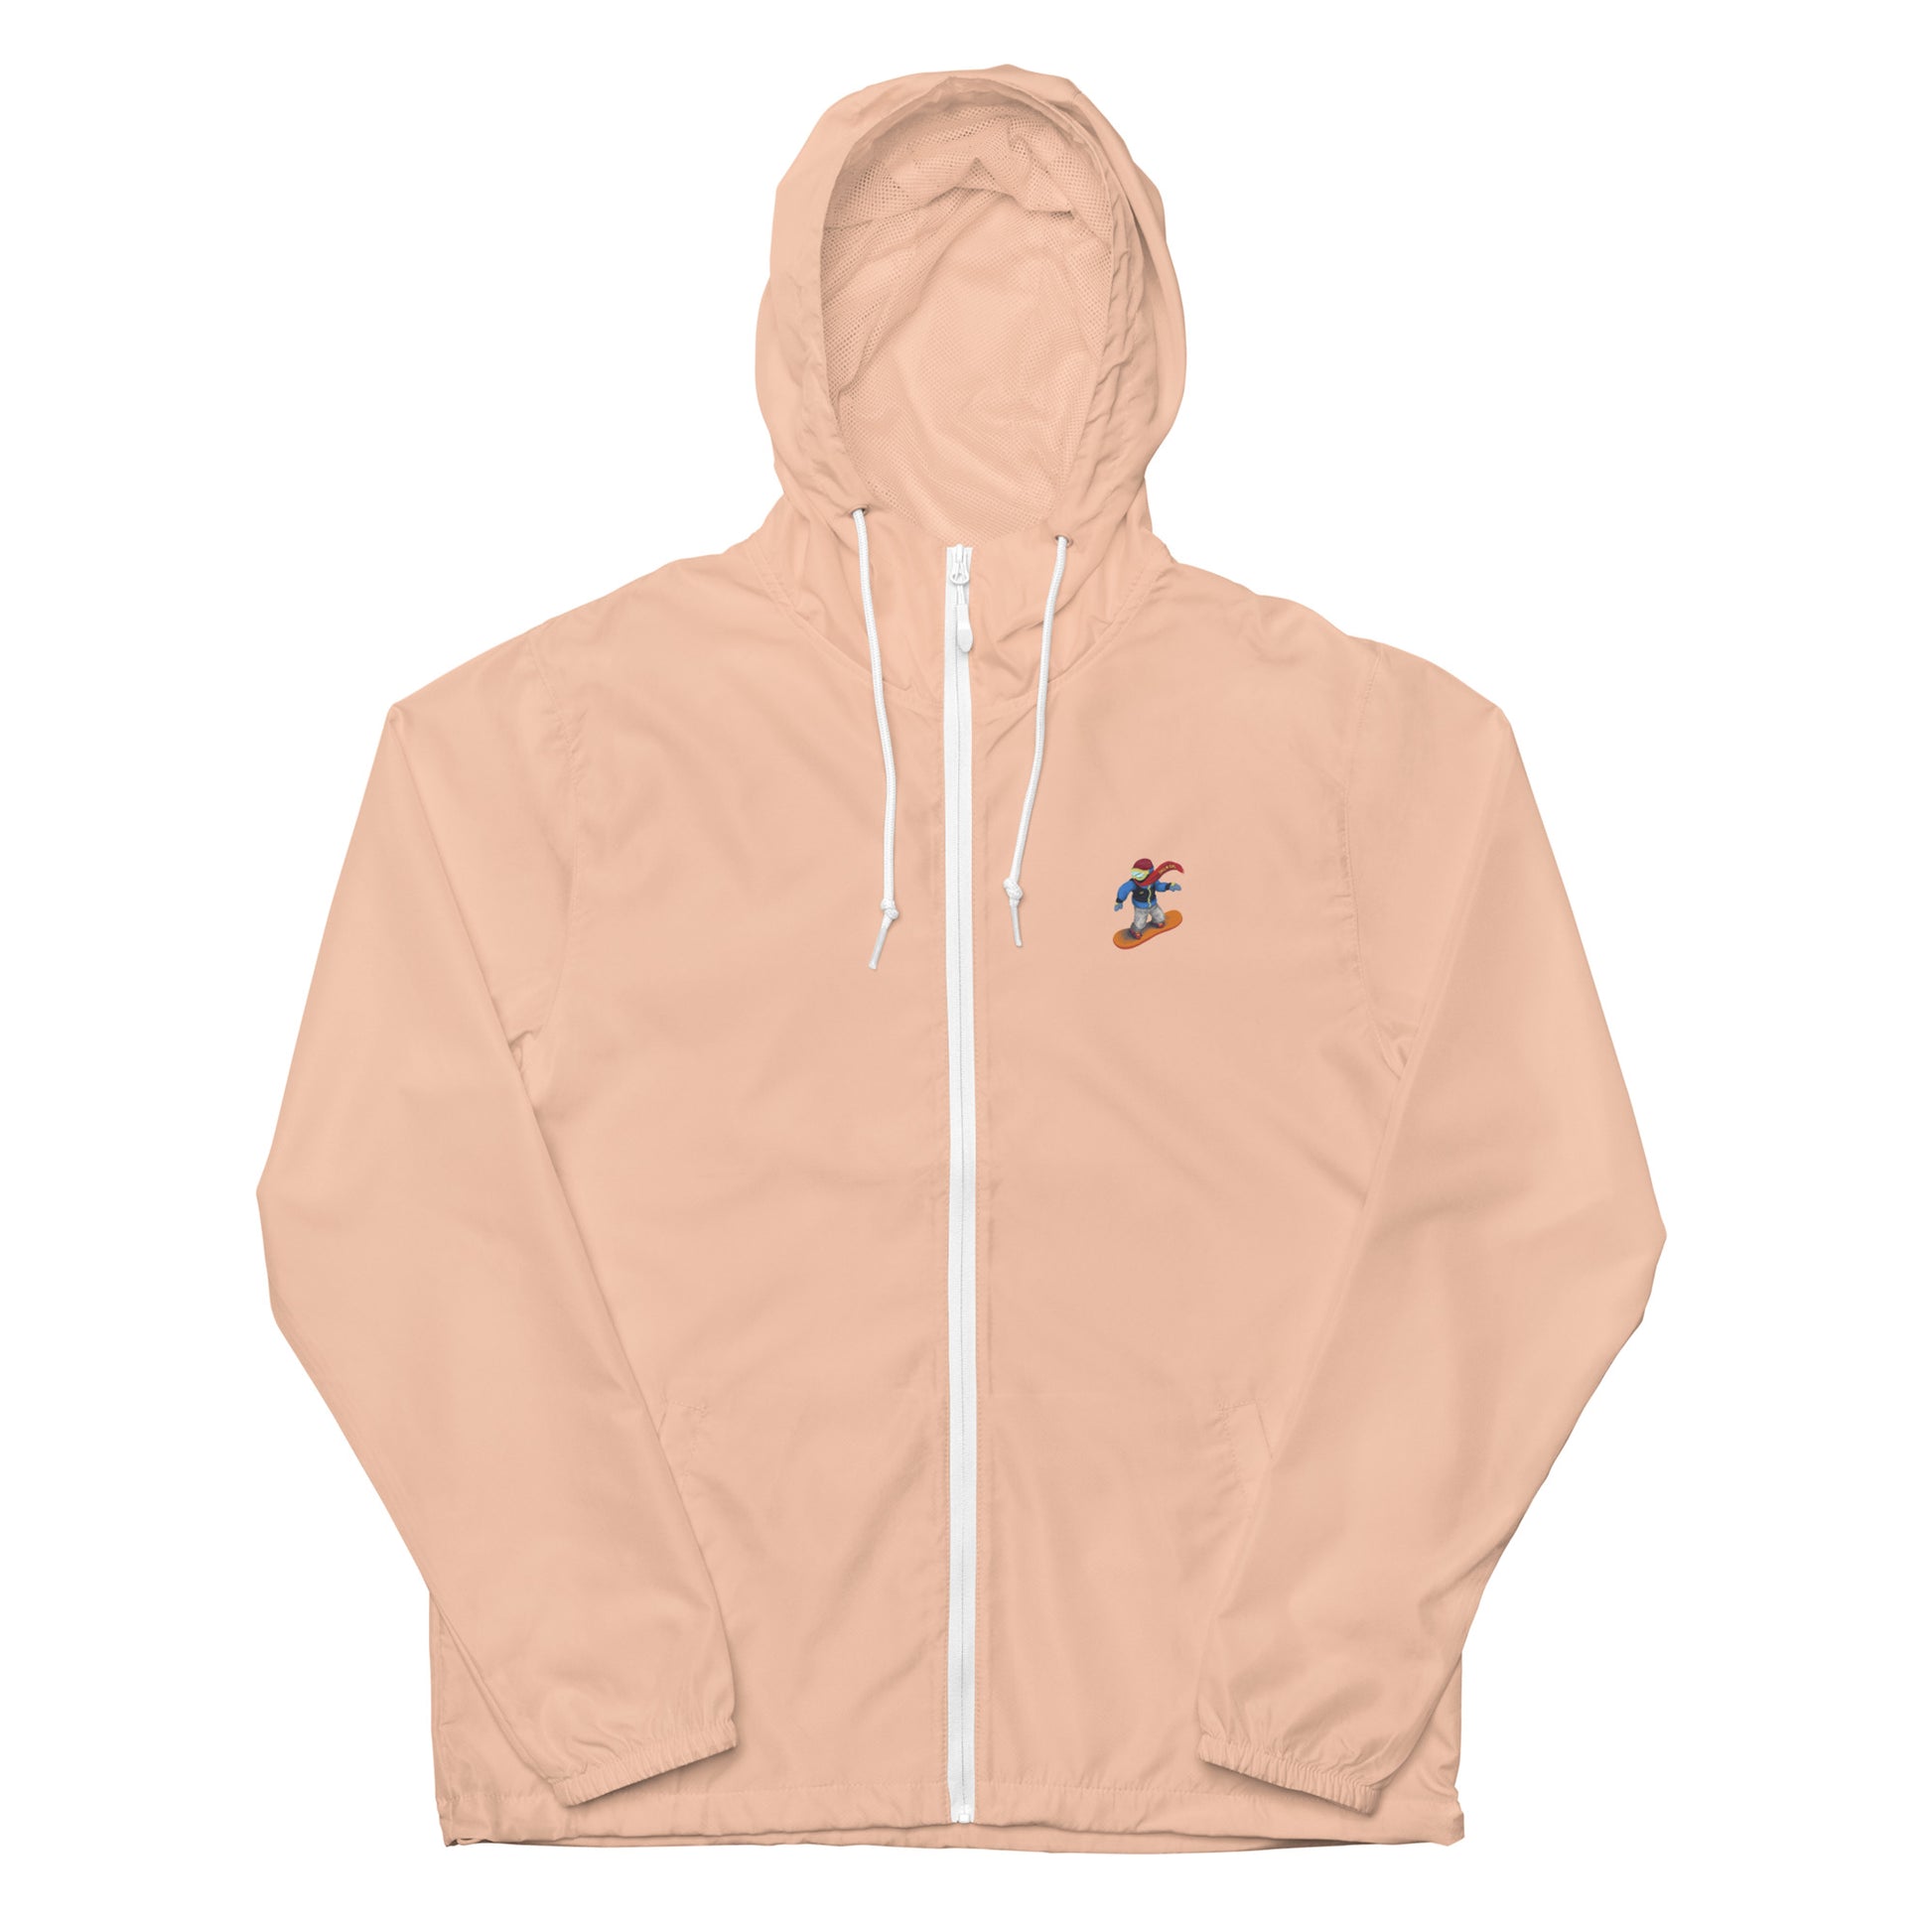 blush white snowboard emoji hoodie with zipper